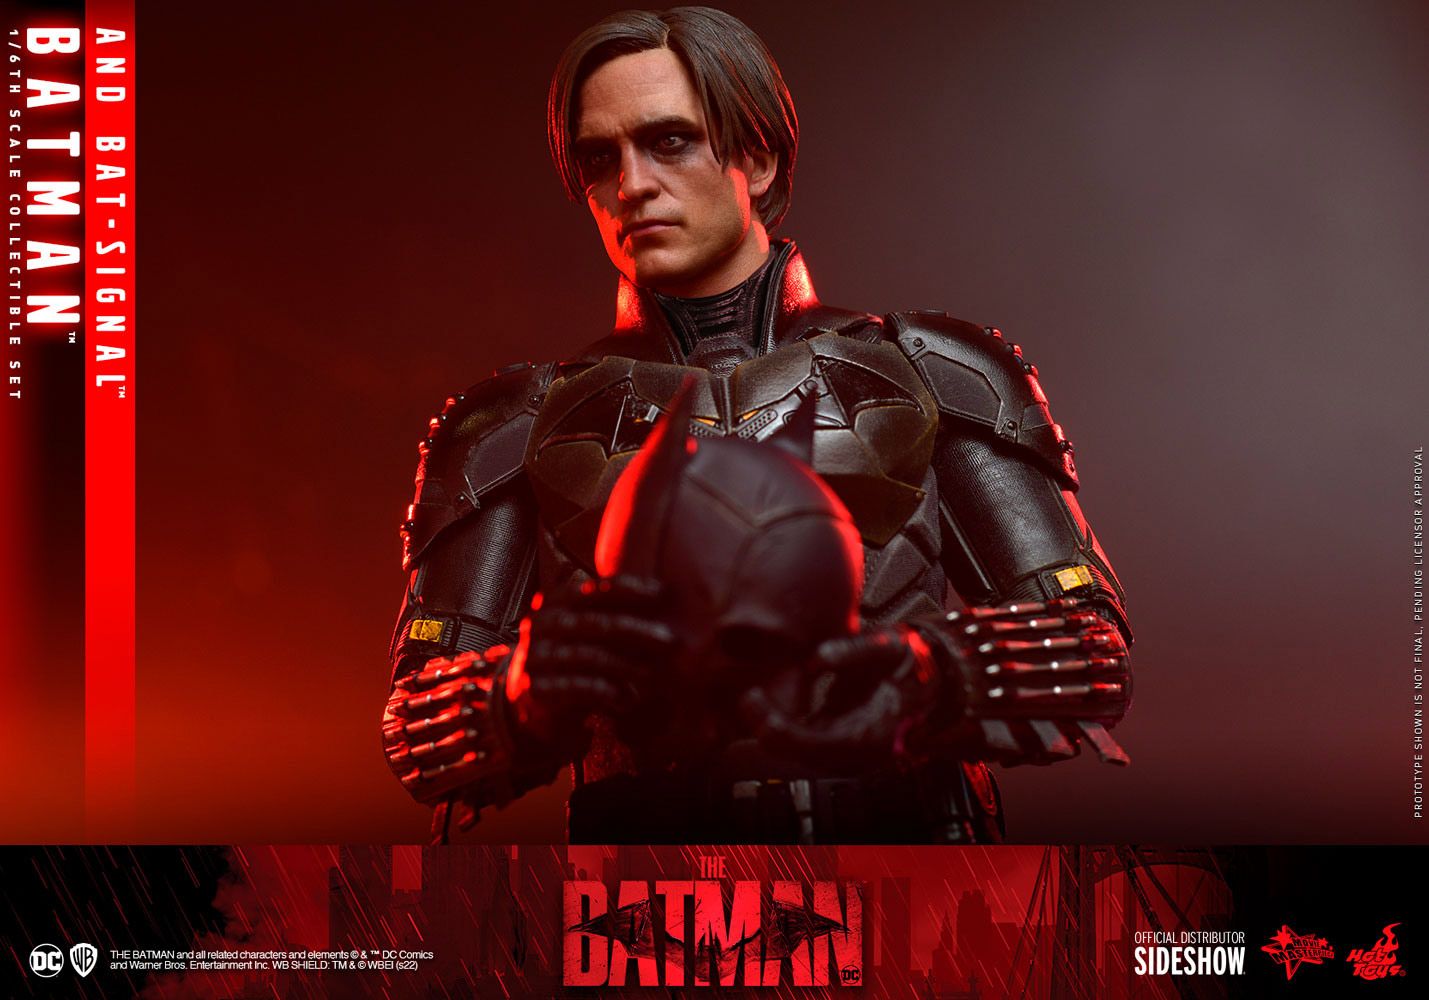 The Batman Hot Toys Figure Features Light-Up Bat Signal